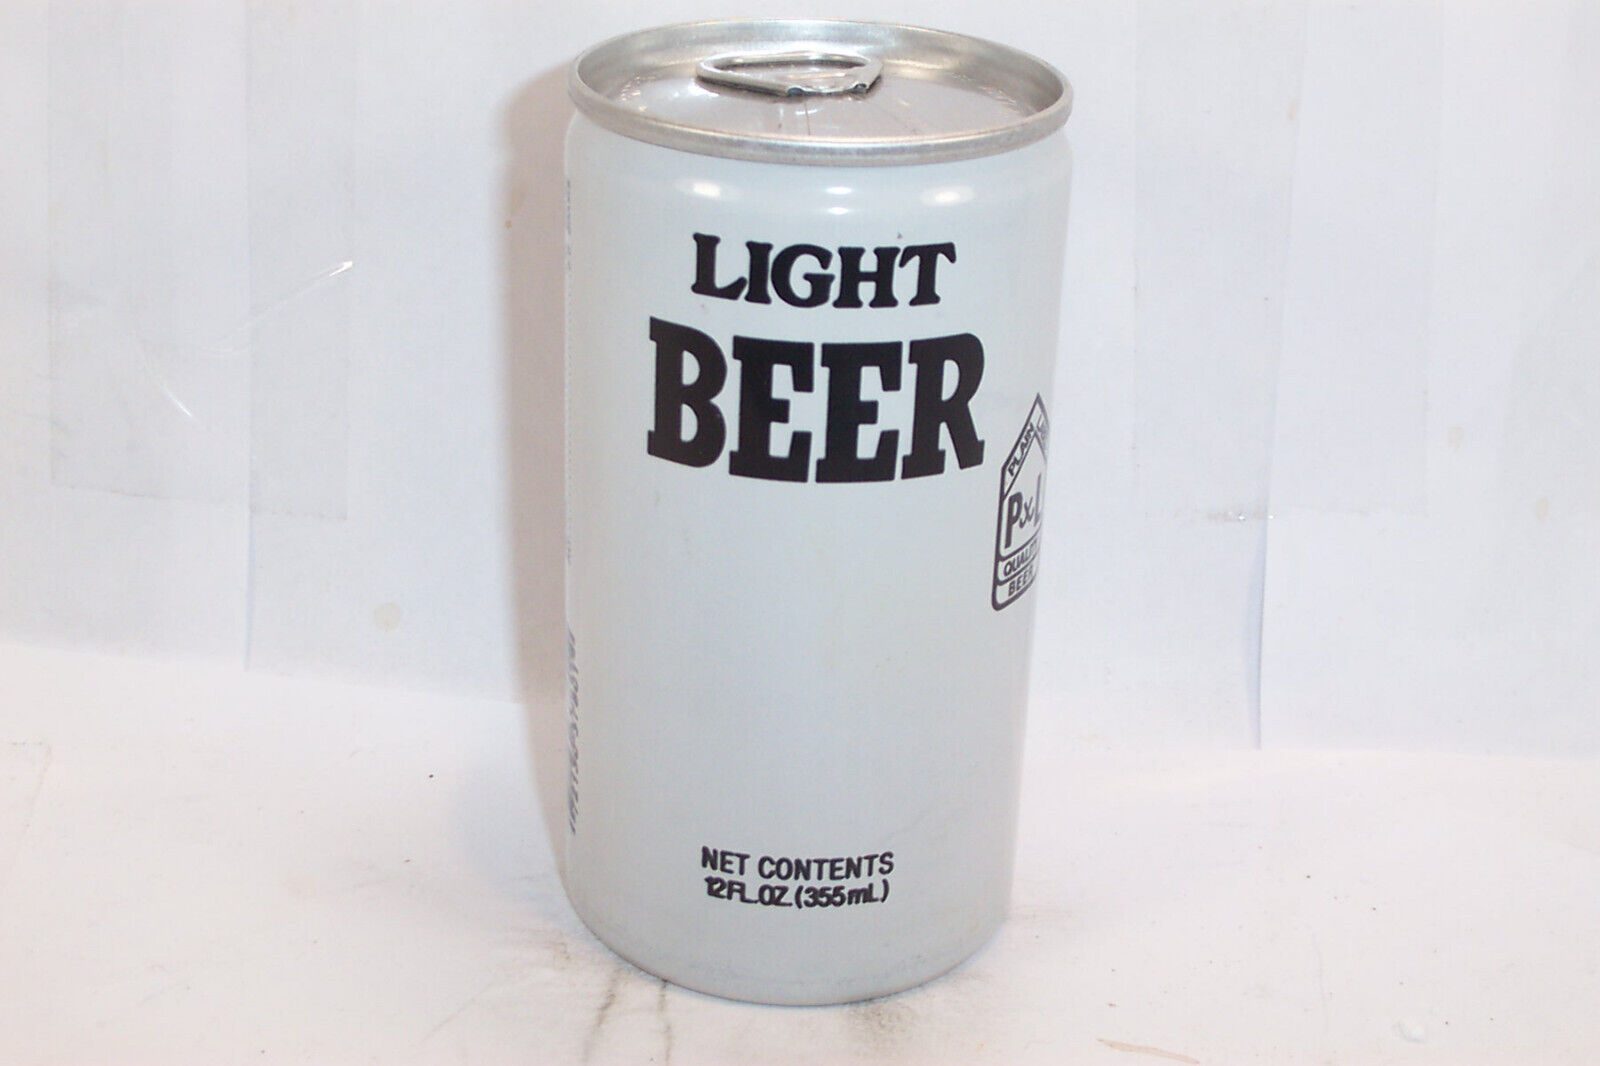 P&L Light Beer (Generic)   Falstaff Brewing   4 Cities   Bottom Open   ABC 29/21